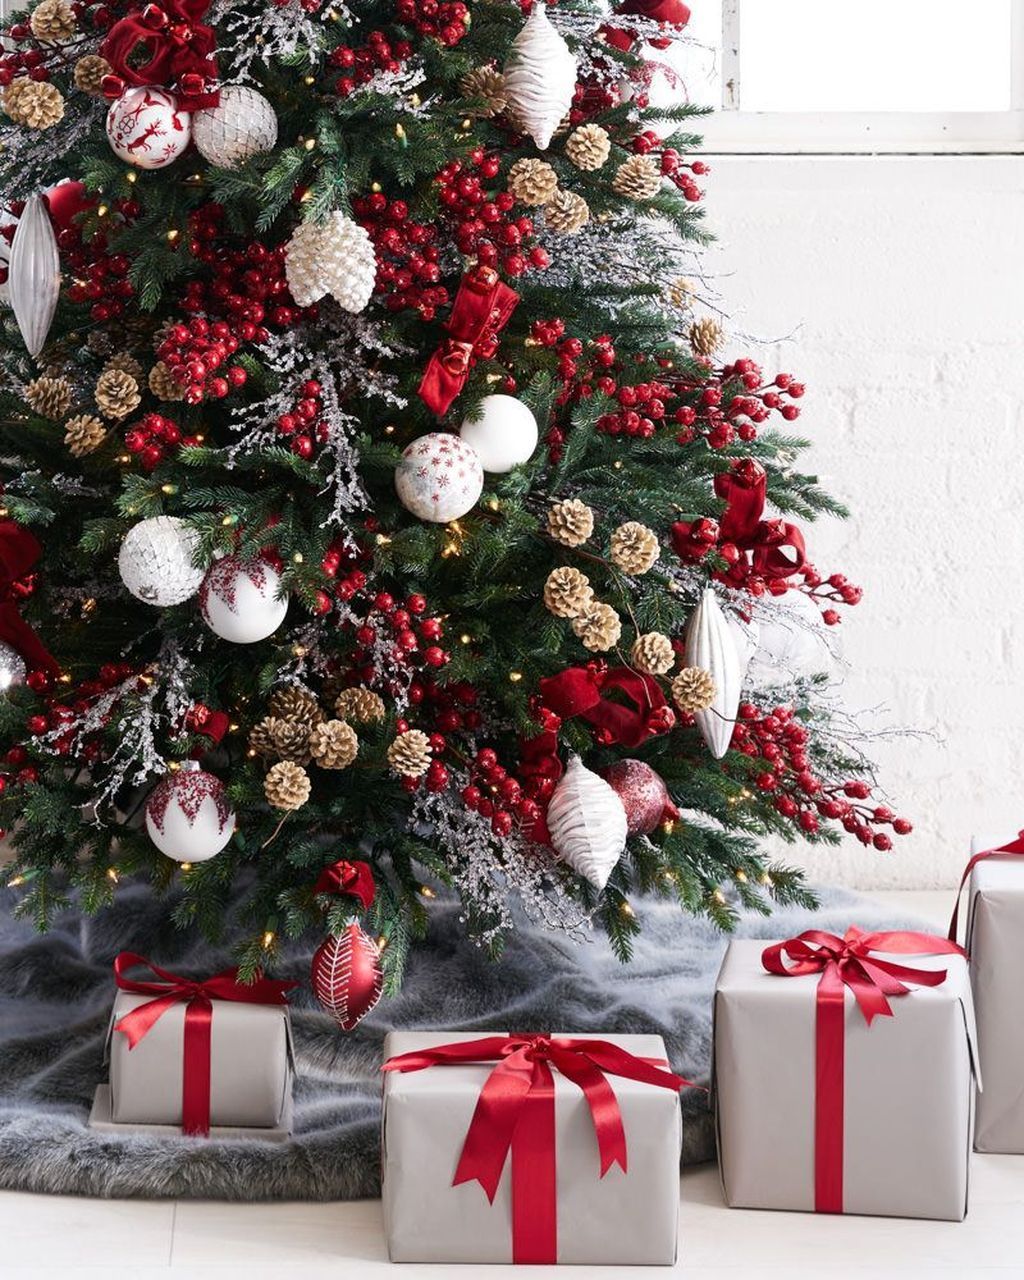 Amazing Winter Christmas Tree Design And Decor Ideas 10 - MAGZHOUSE